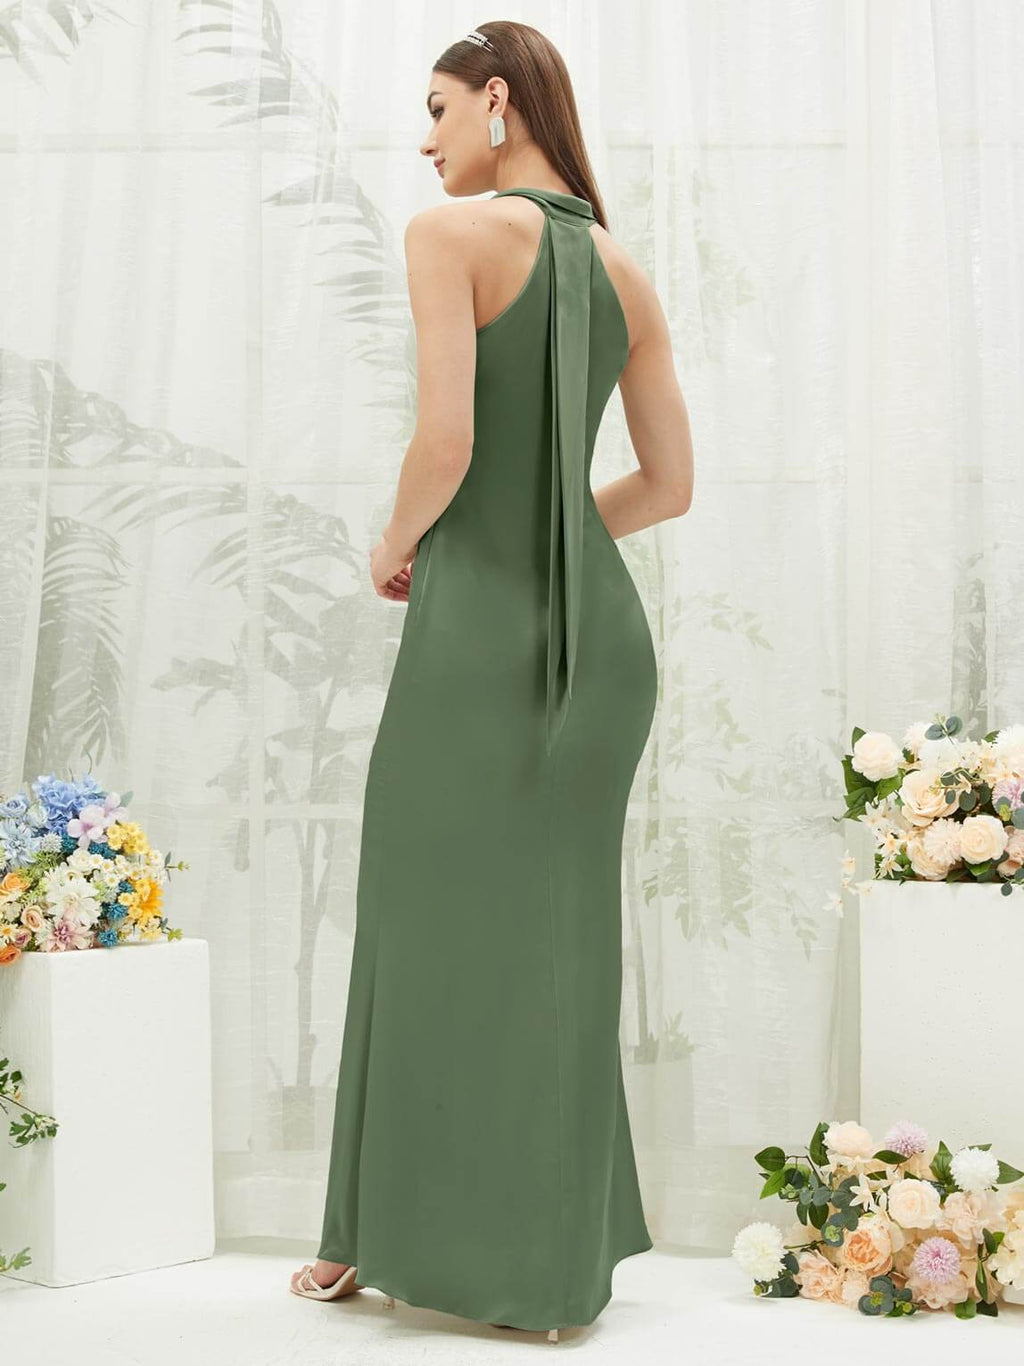 NZ Bridal Halter Neck Maxi Satin bridesmaid dresses EB30520 Emerson Olive Green a